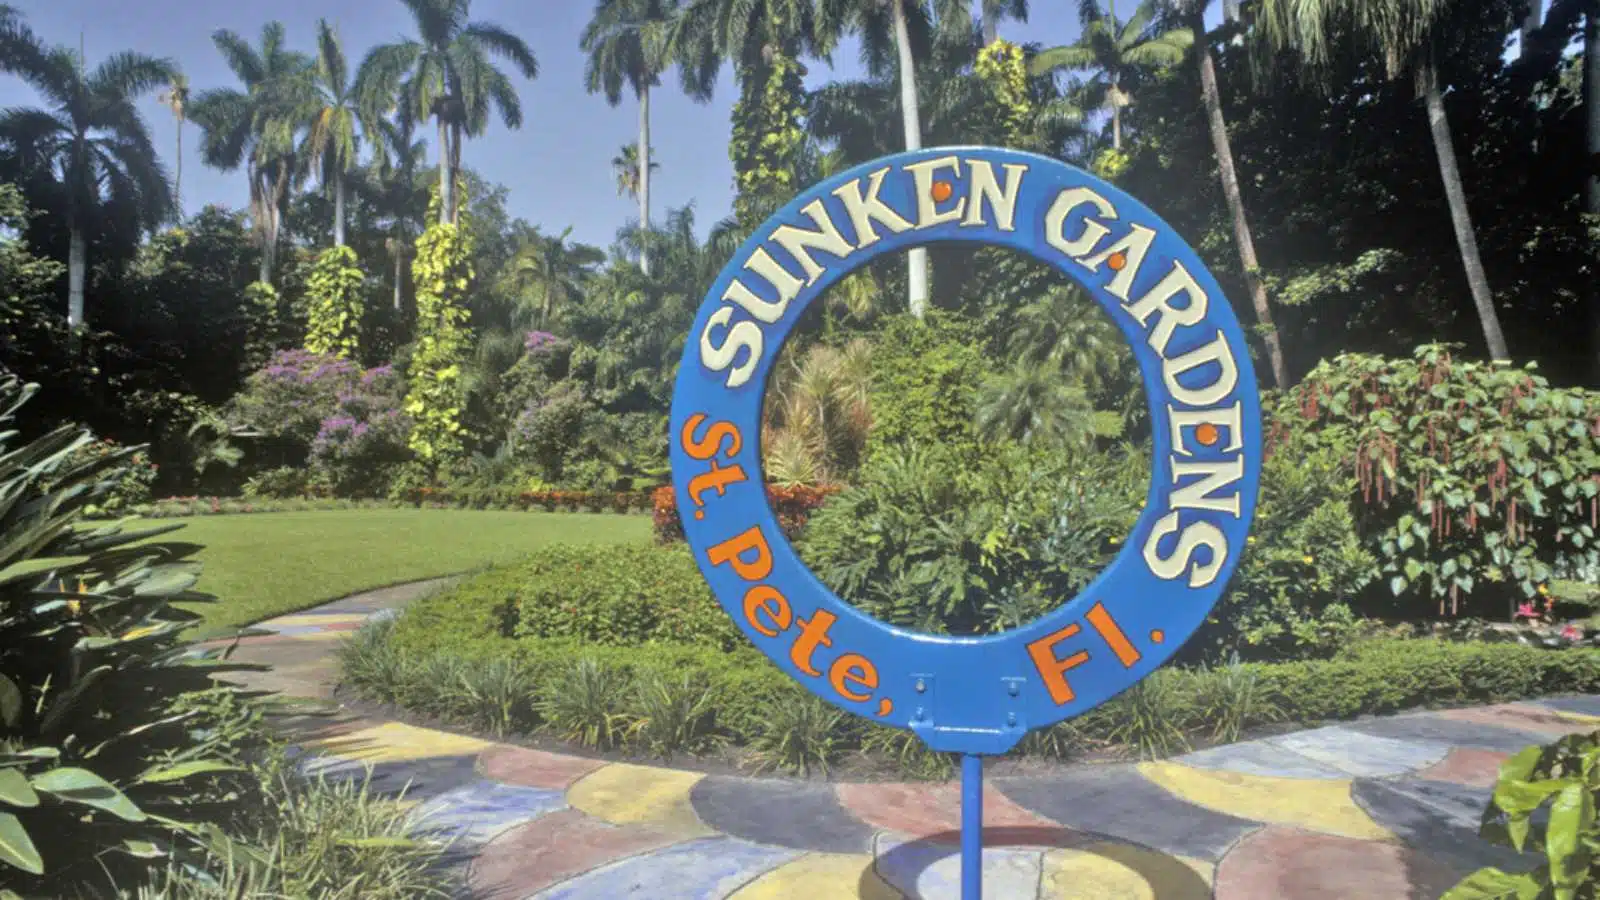 Sunken Gardens, Florida's foremost botanical gardens, St. Petersburg, Florida